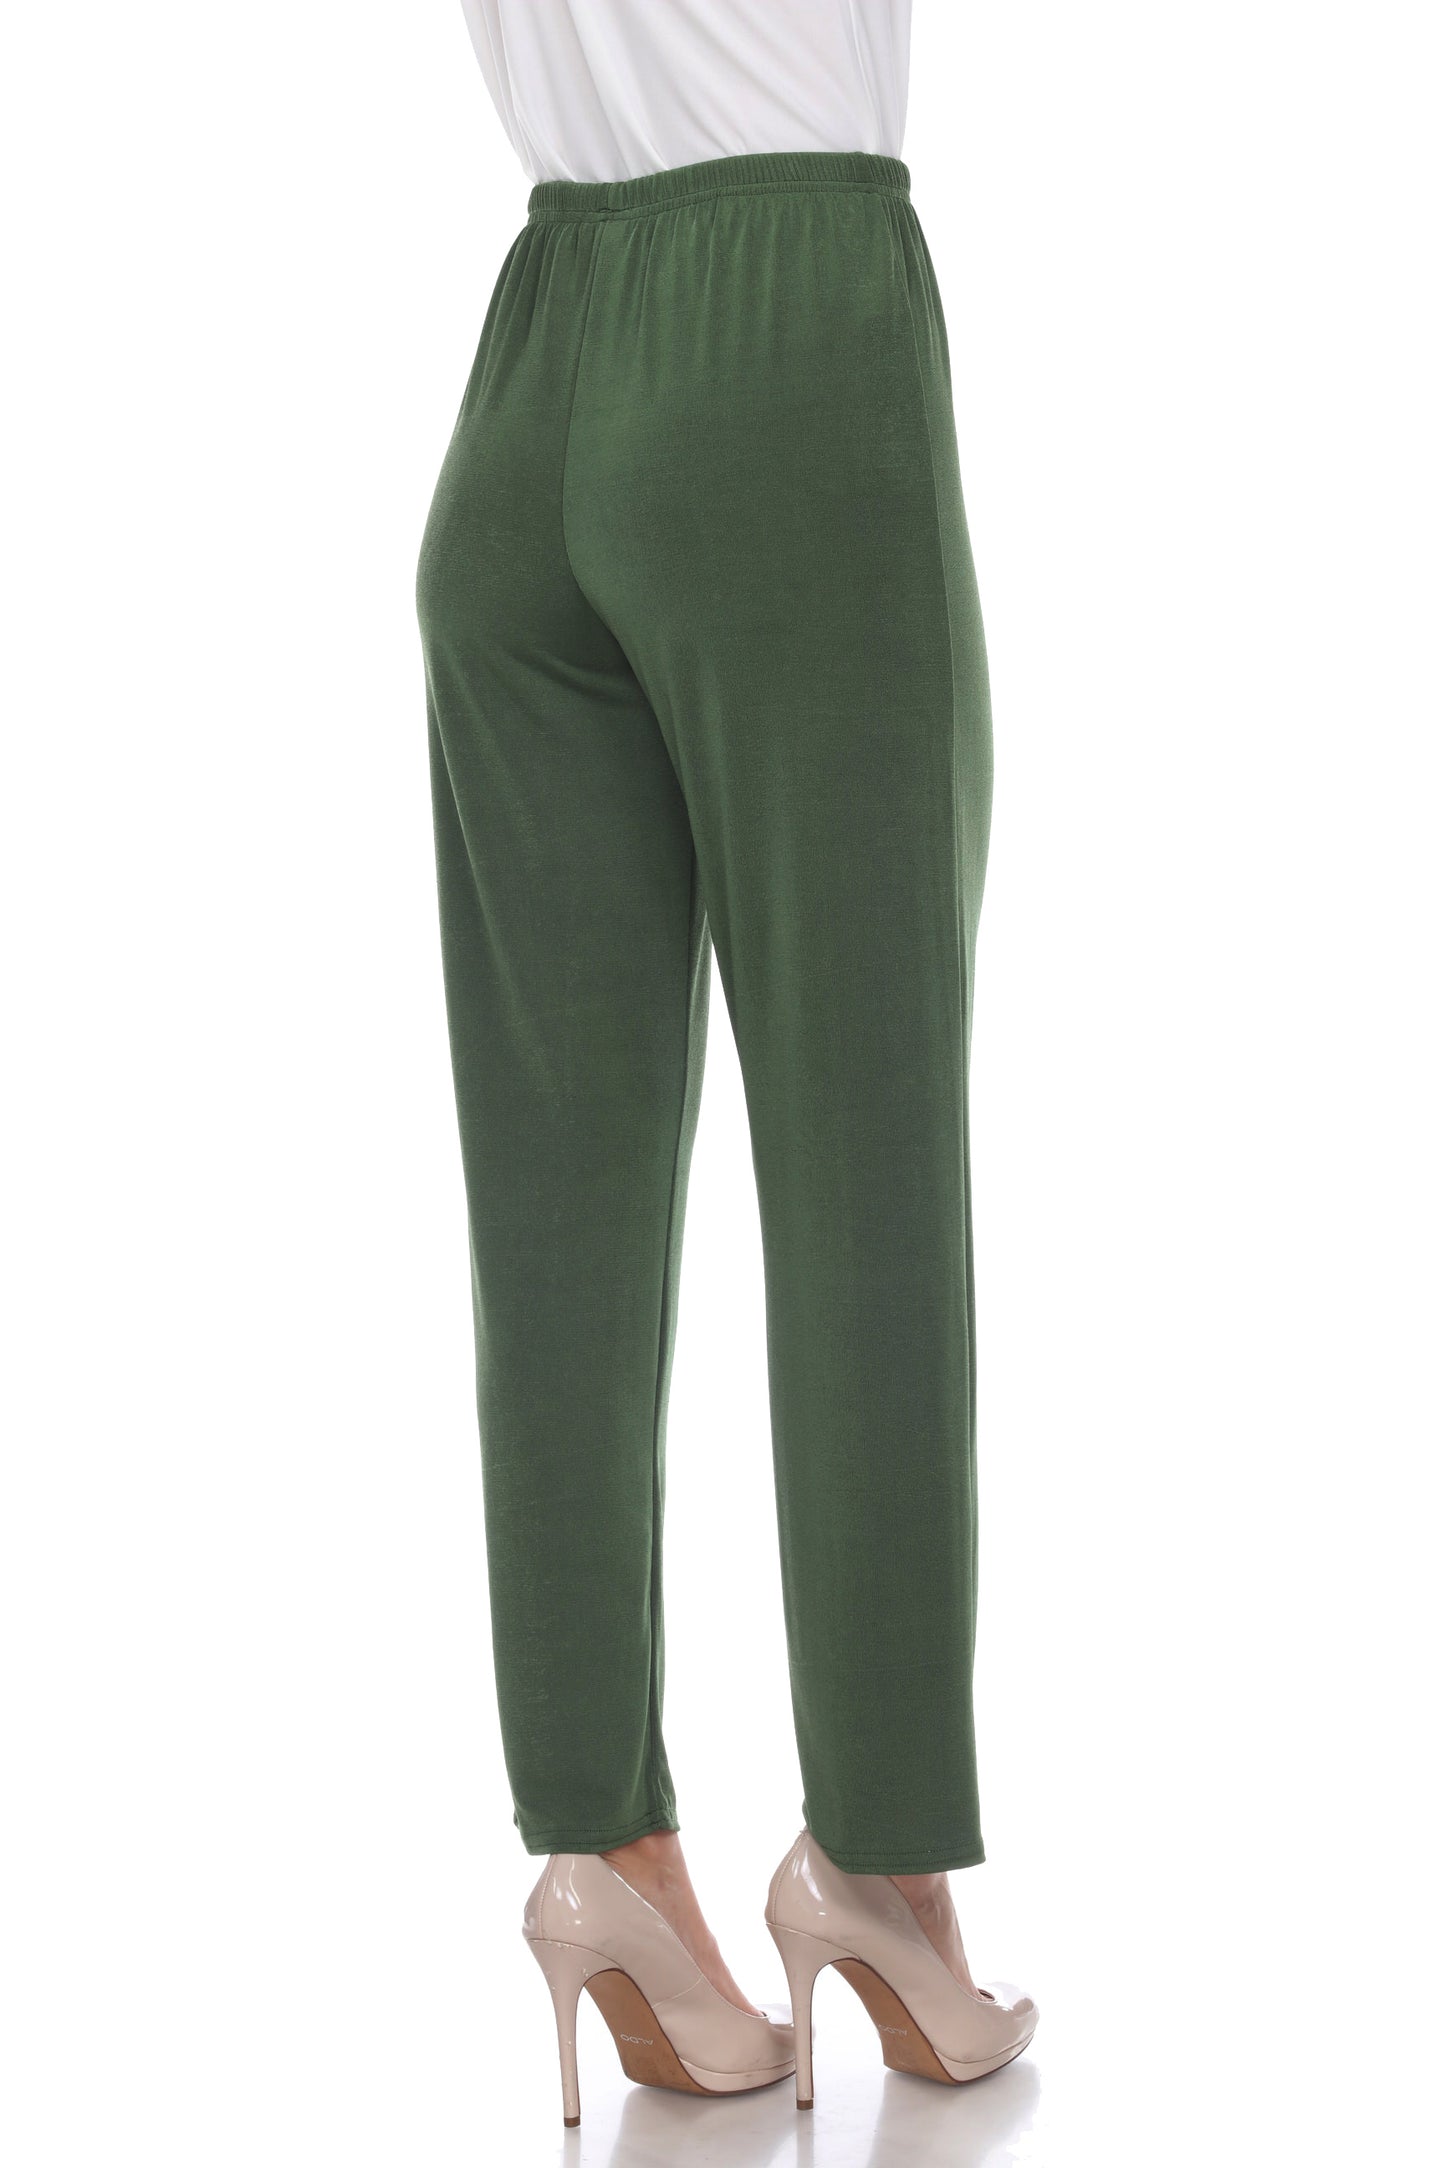 Jostar Women's Elastic Waist Pants, 500BN - Jostar Online